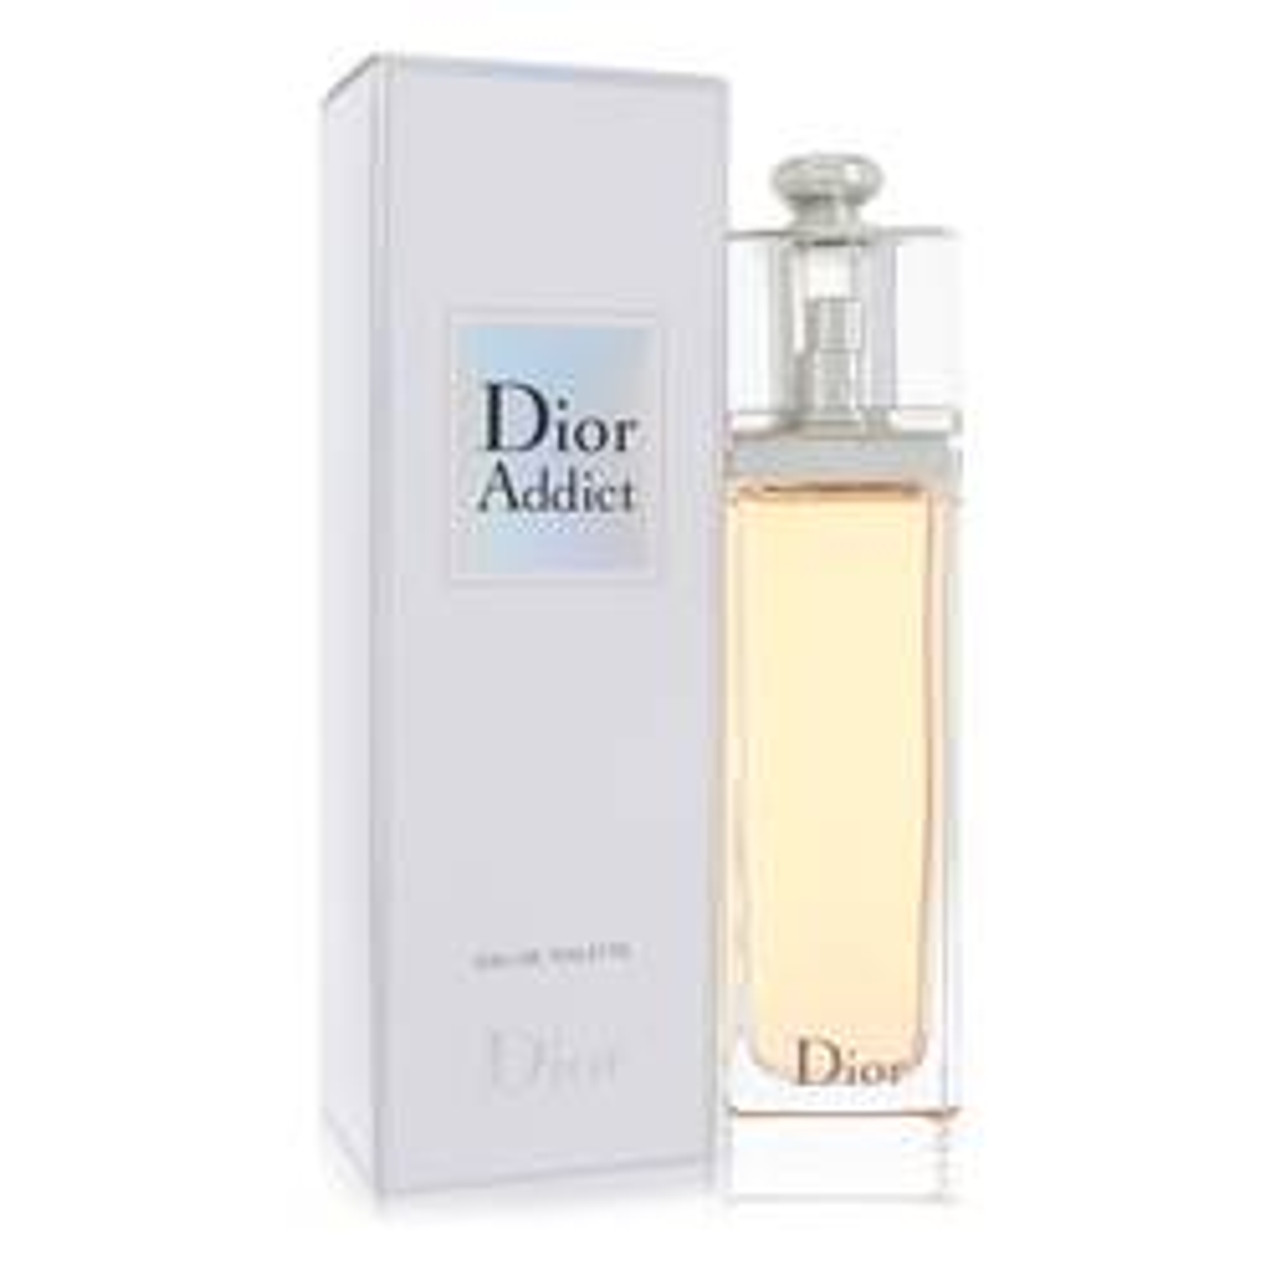 Dior Addict Perfume By Christian Dior Eau De Toilette Spray 3.4 oz for Women - *Pre-Order